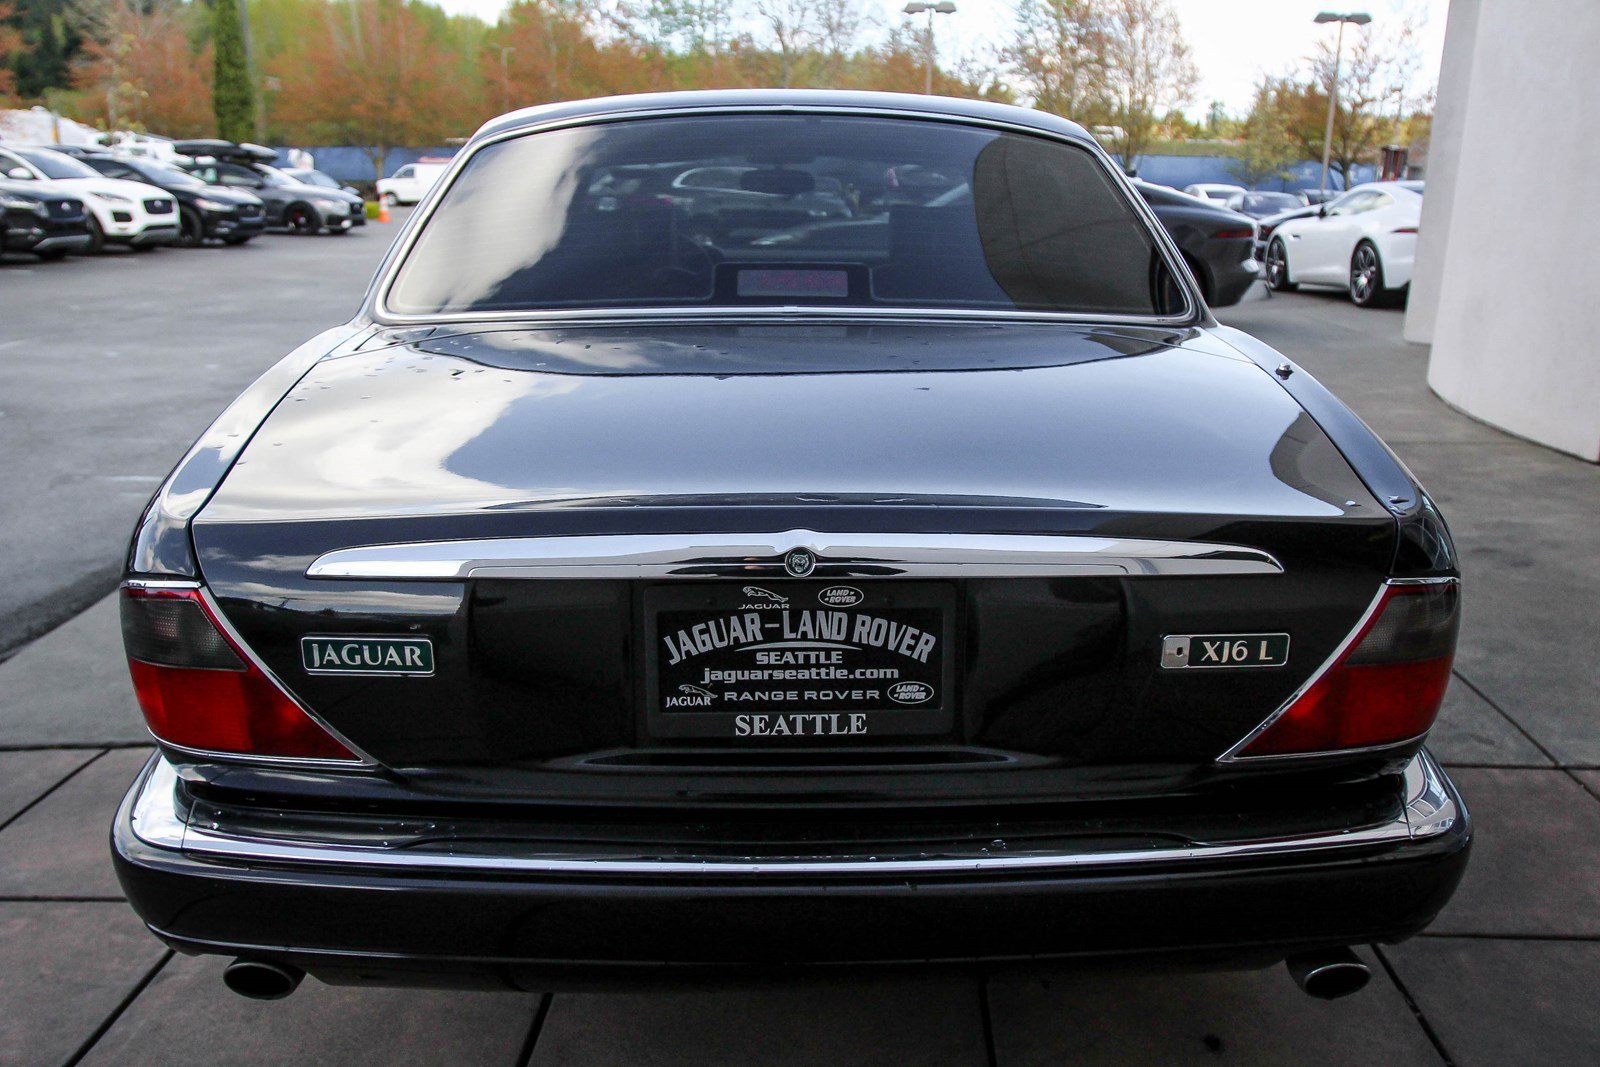 Pre-Owned 1997 Jaguar XJ L 4dr Car in Bellevue #8677 | Jaguar Bellevue